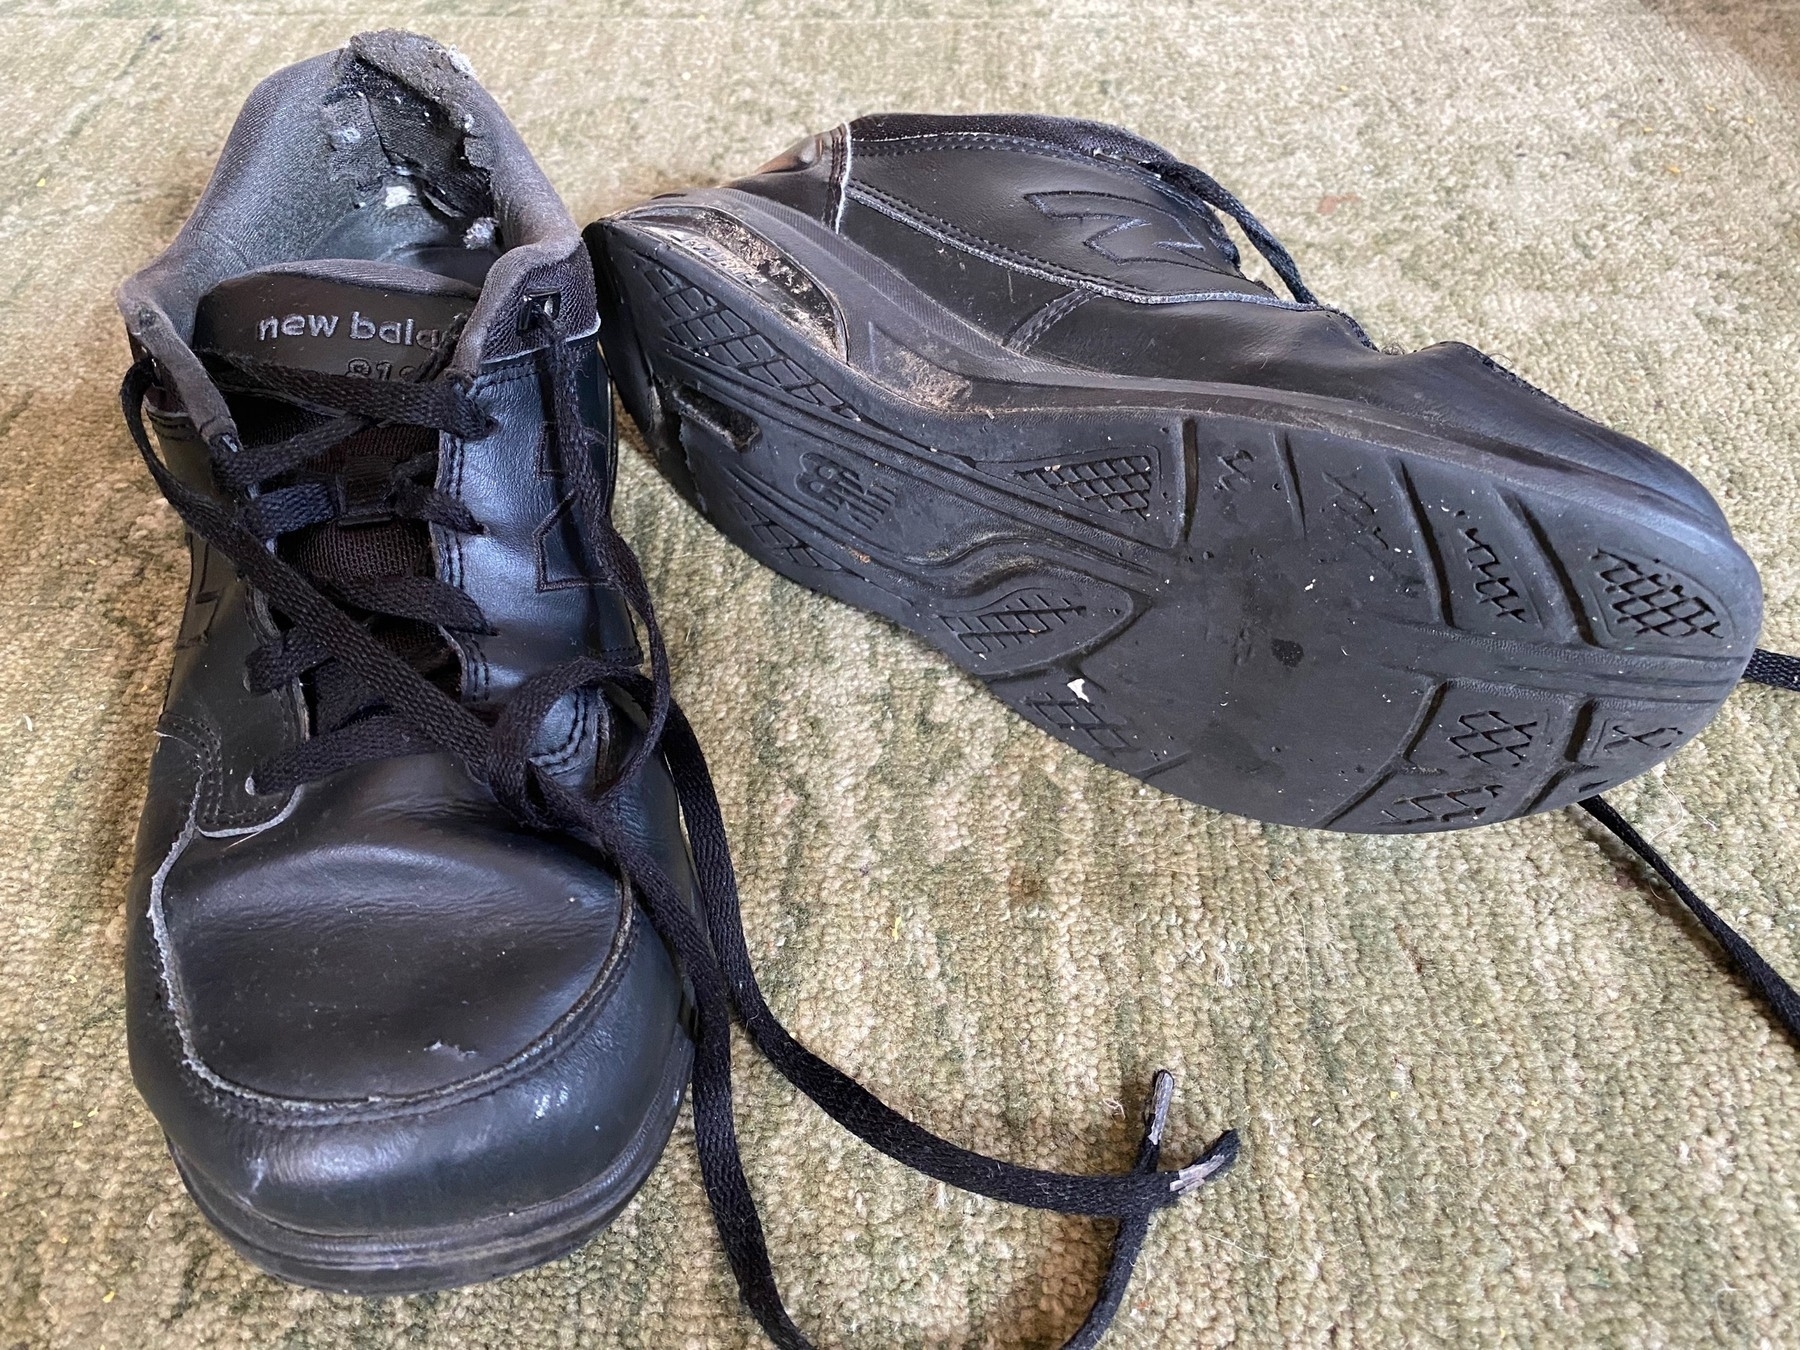 Pair of fairly worn black walking shoes.